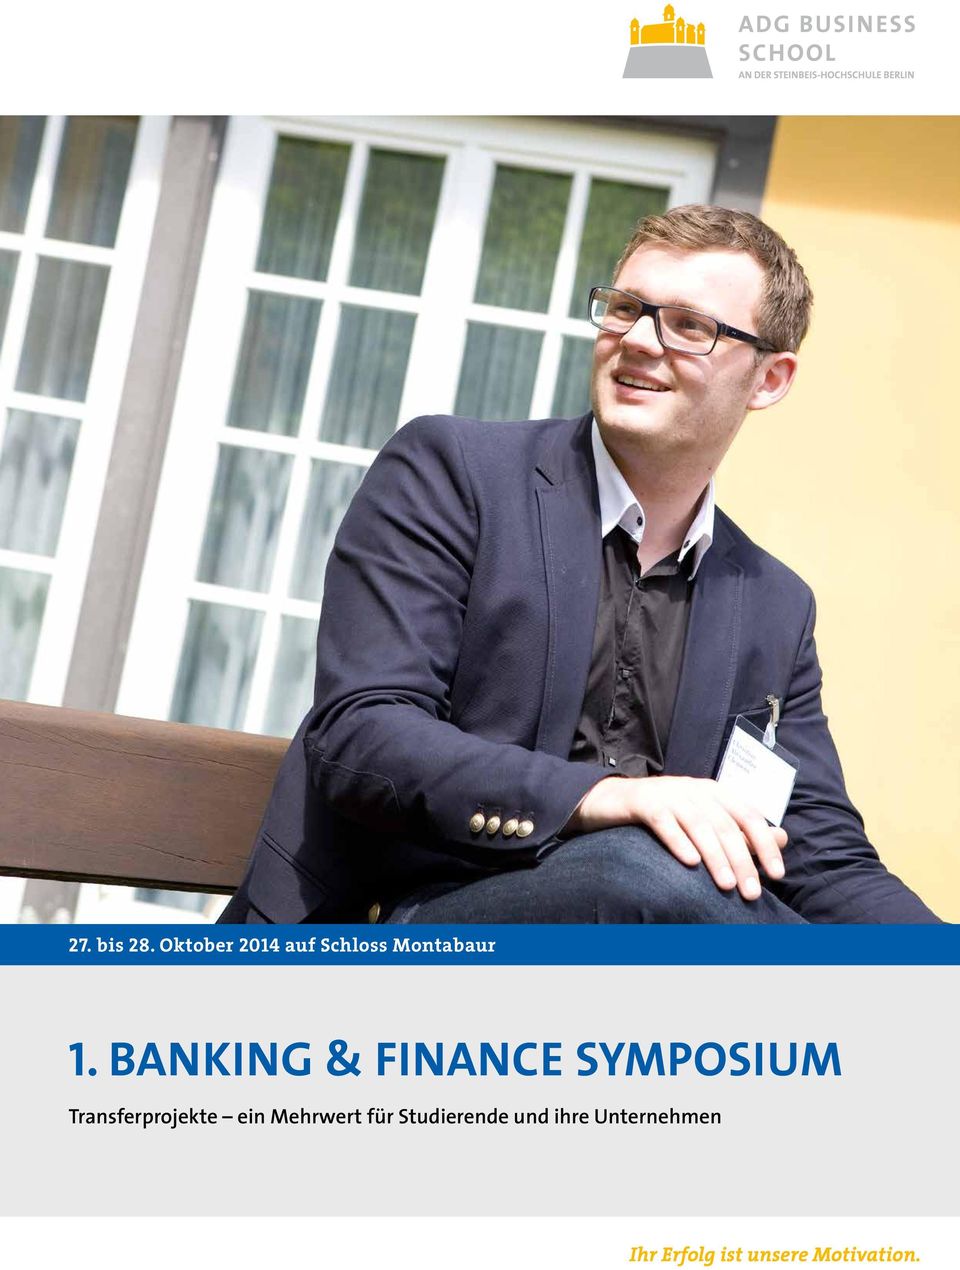 1. BANKING & FINANCE SYMPOSIUM